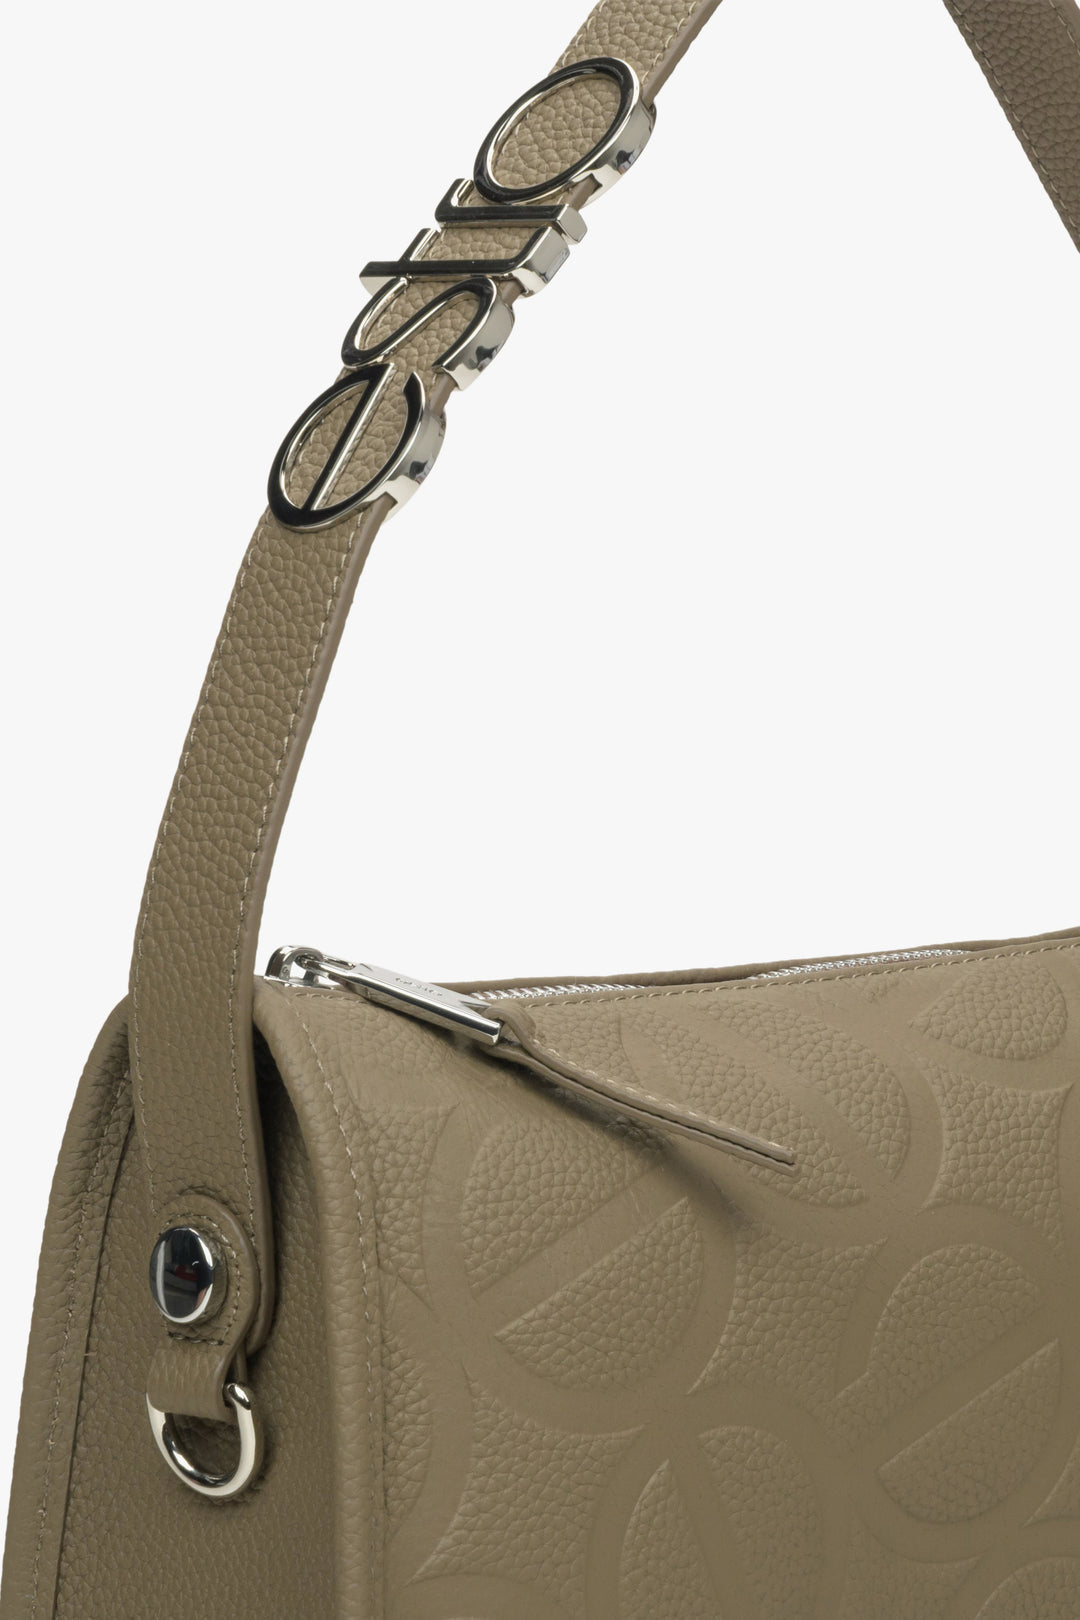 Women's brown and grey shoulder bag - a close-up on details.